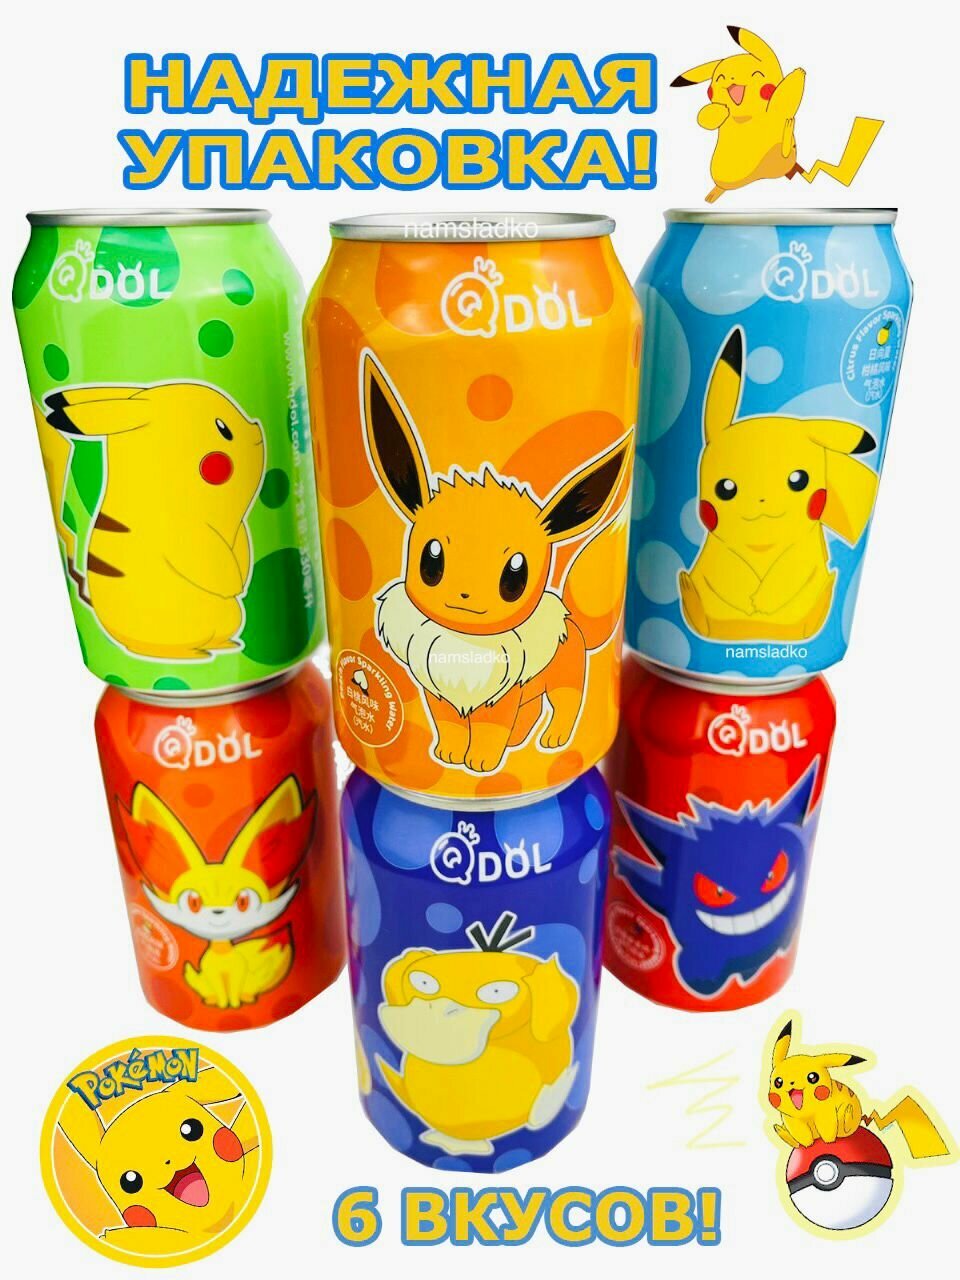 Газированные напитки Pokemon набор 6шт * 330 мл, (Виноград, Клубника, Лимон, Личи, Персик, Цитрус), Китай.